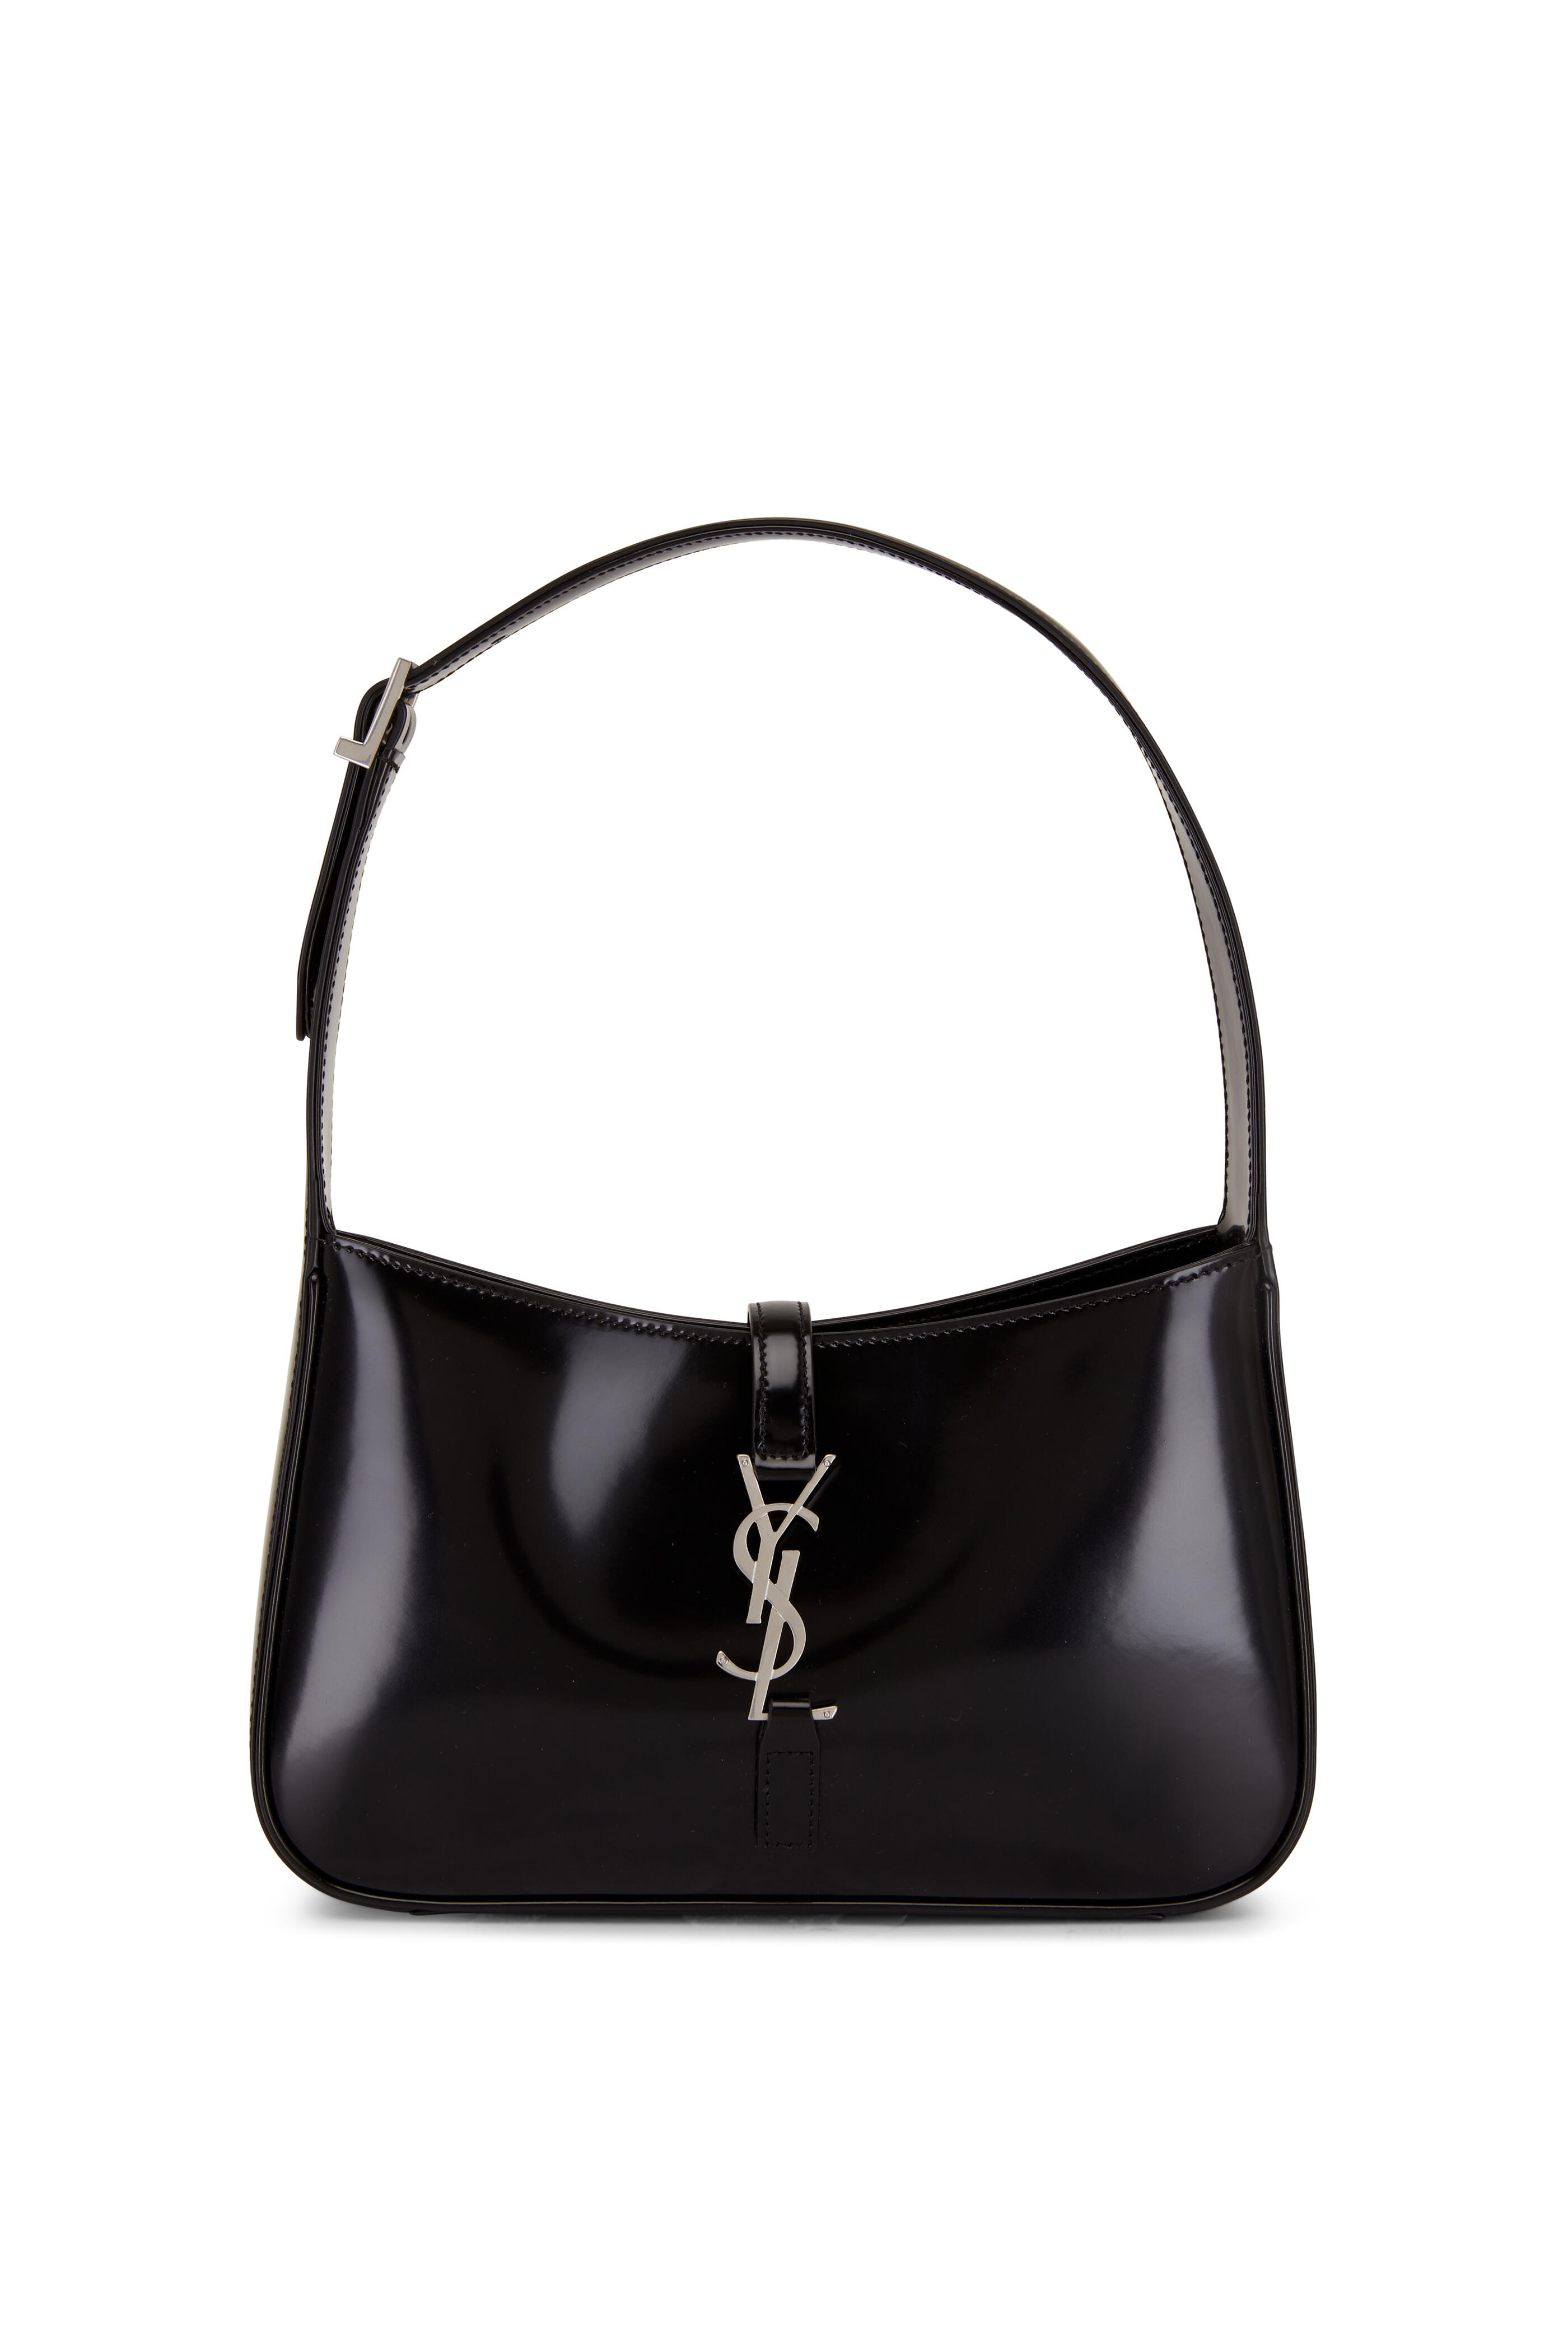 LUCKY Brand Francoise Hobo Shoulder Bag Black Whipstitch Pebbled Leat‏her  $189